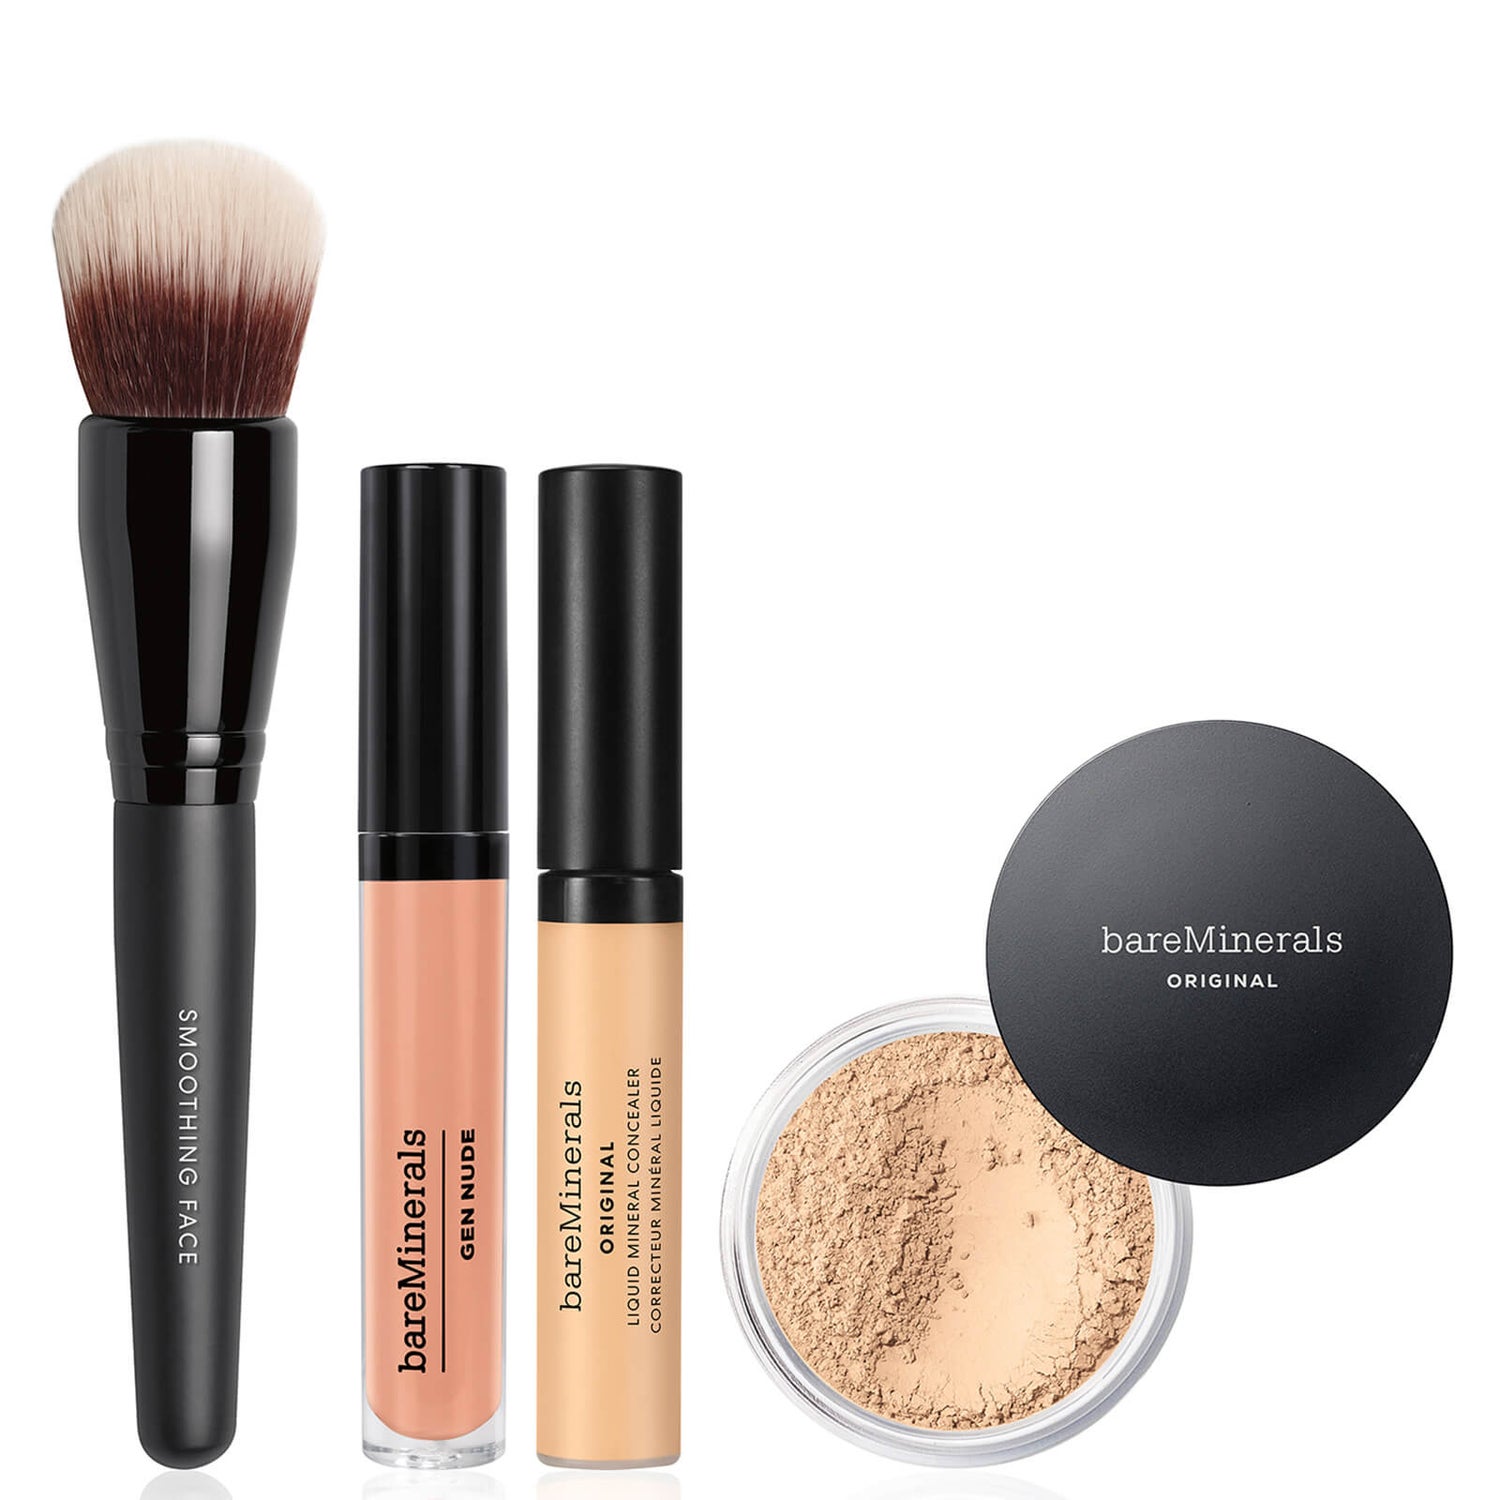 bareMinerals exclusive Clean Beauty Essentials Bundle (Various Shades)